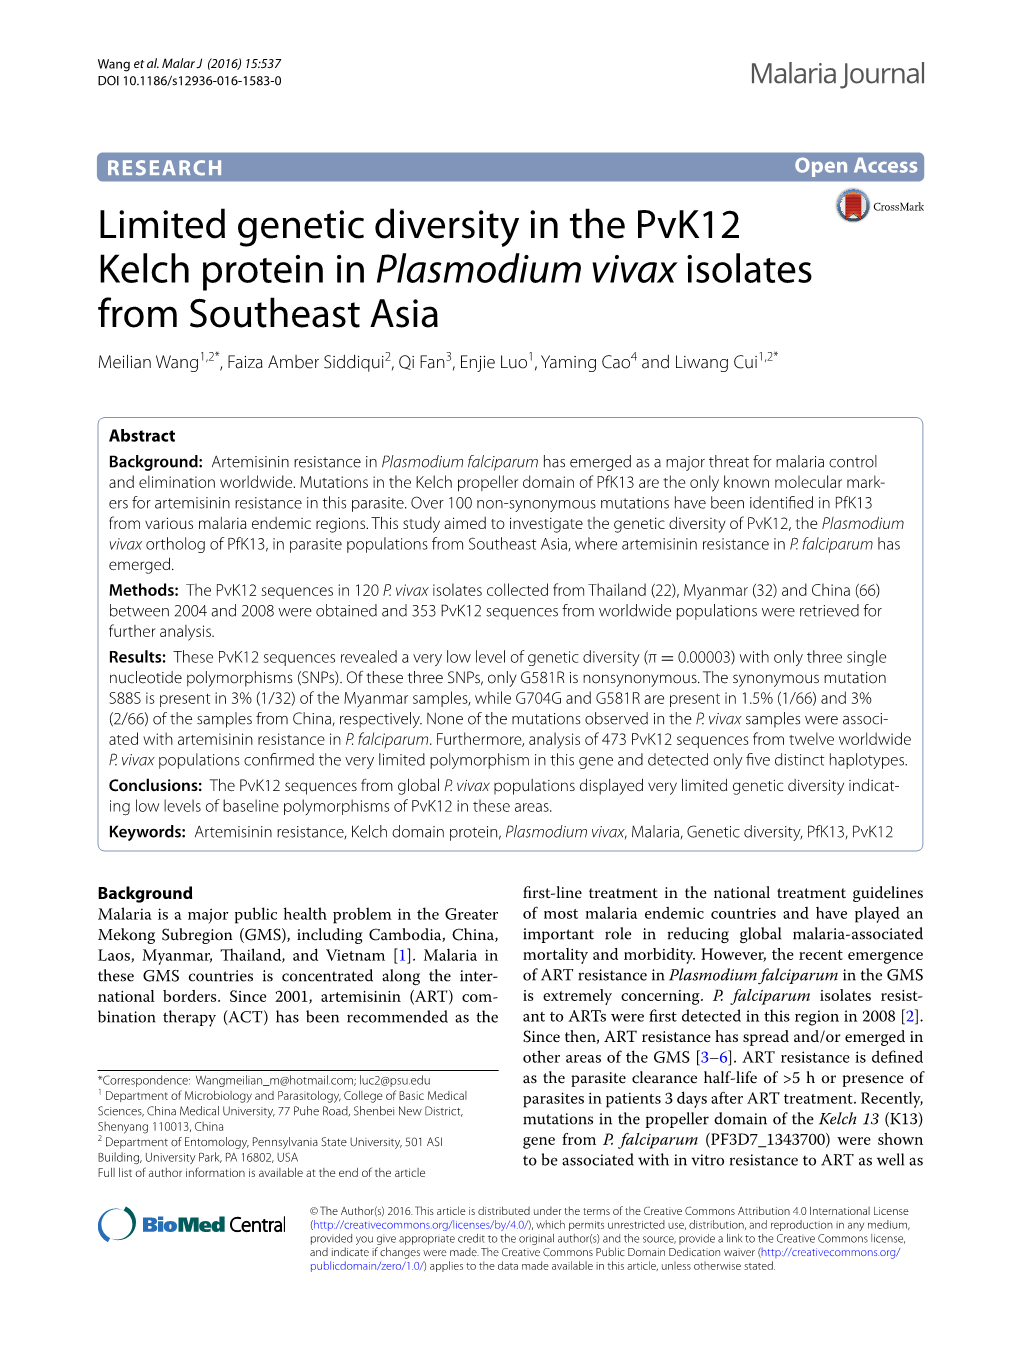 Limited Genetic Diversity in the Pvk12 Kelch Protein in Plasmodium Vivax